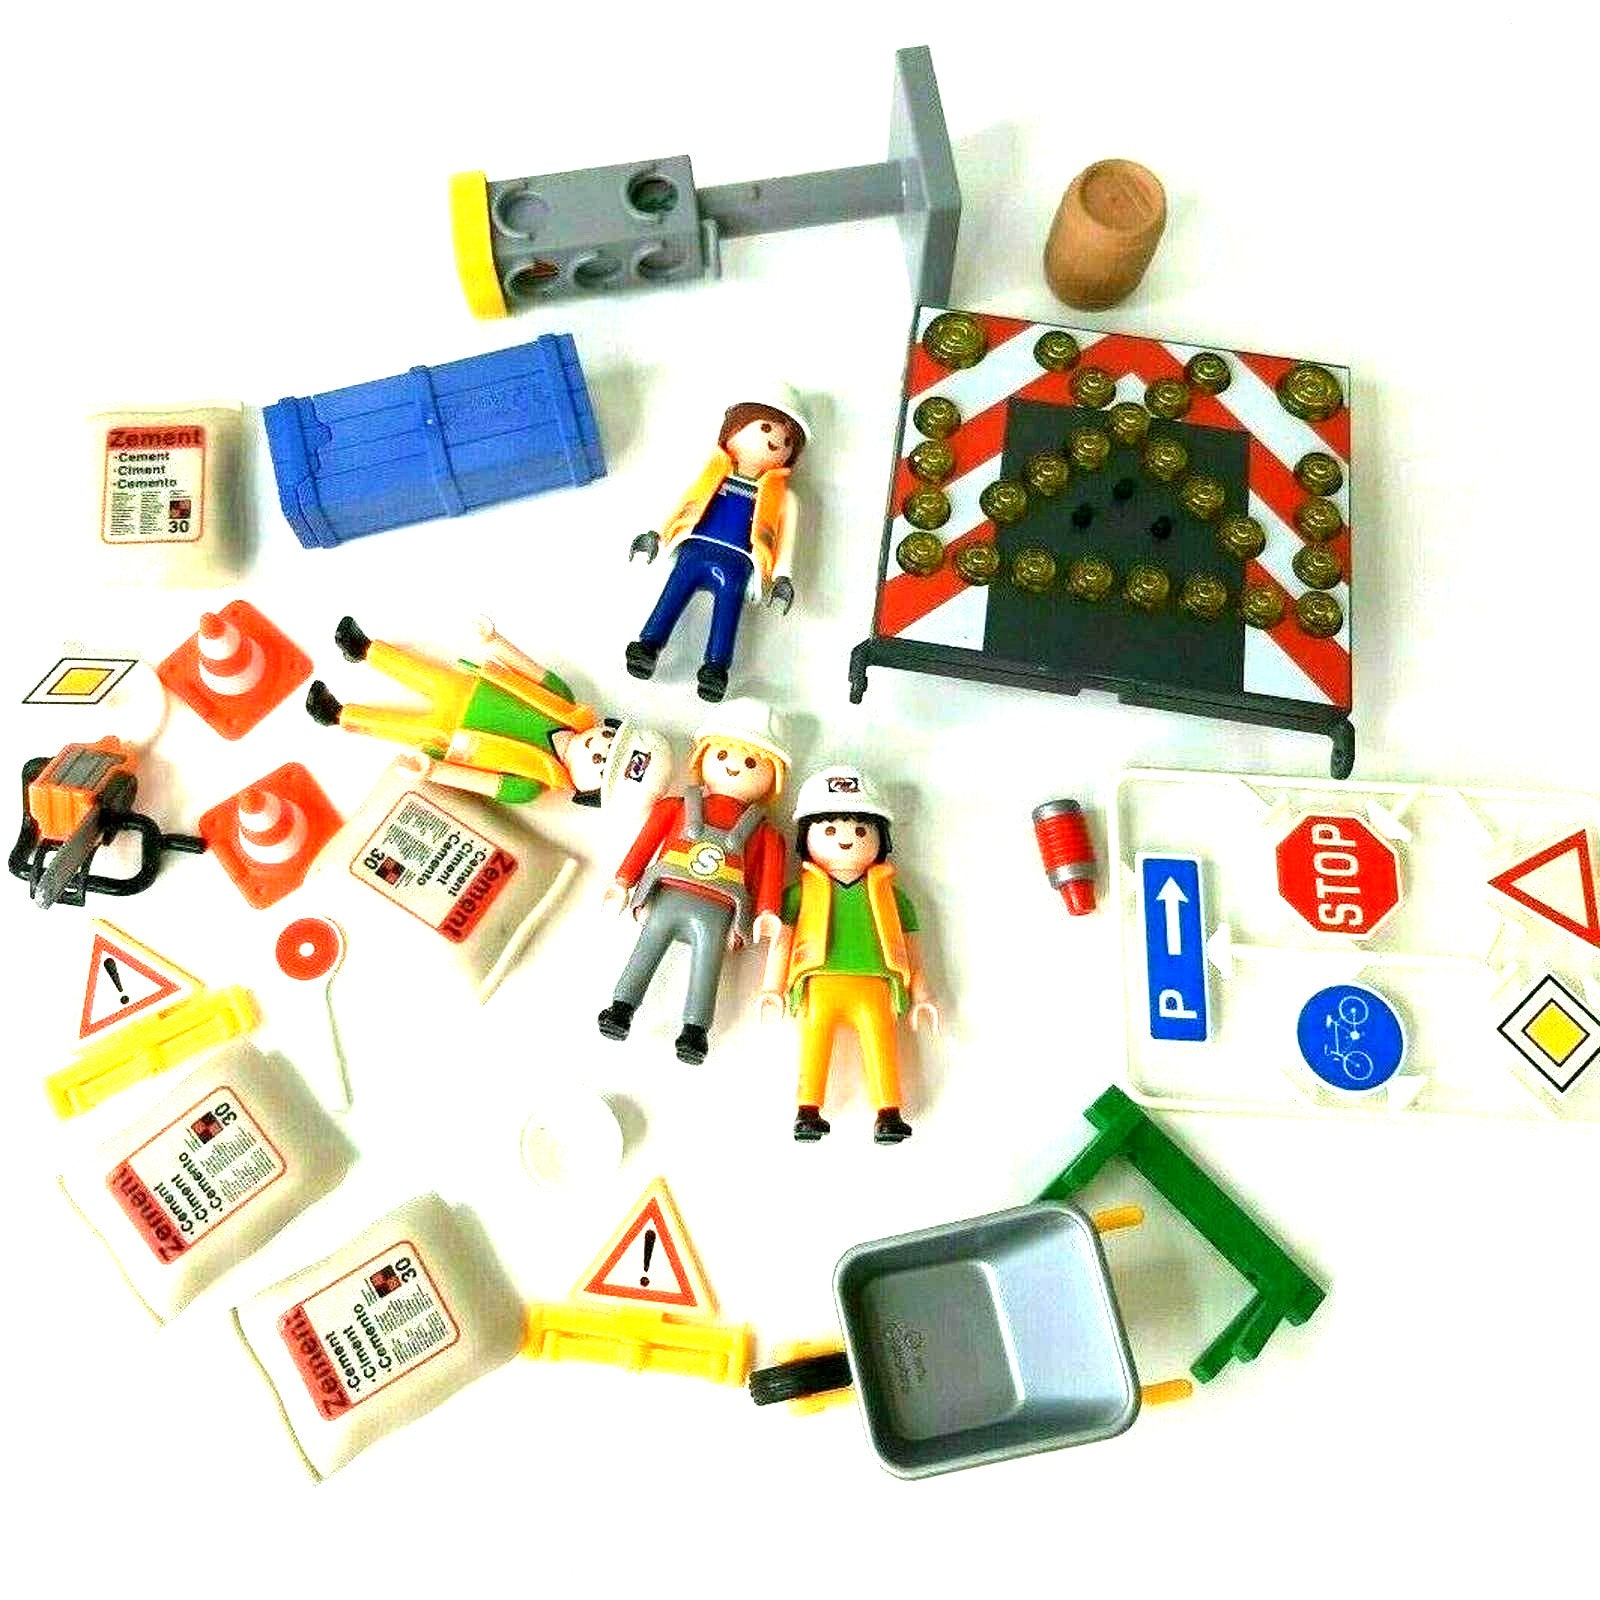 Playmobil Road Construction - Imagination Toys